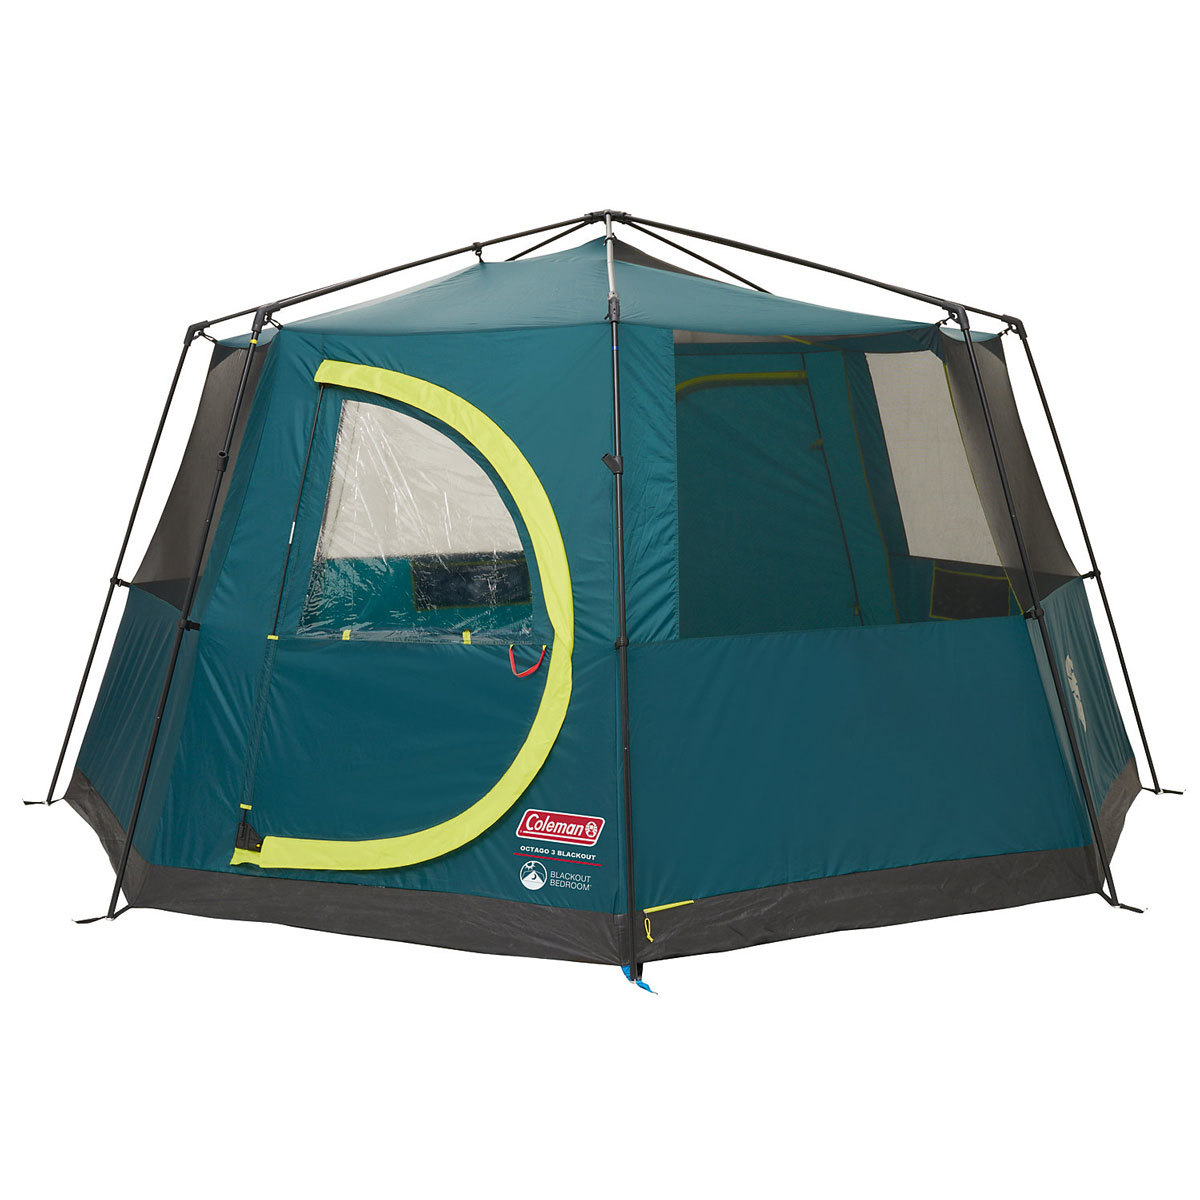 Coleman Octagon tent